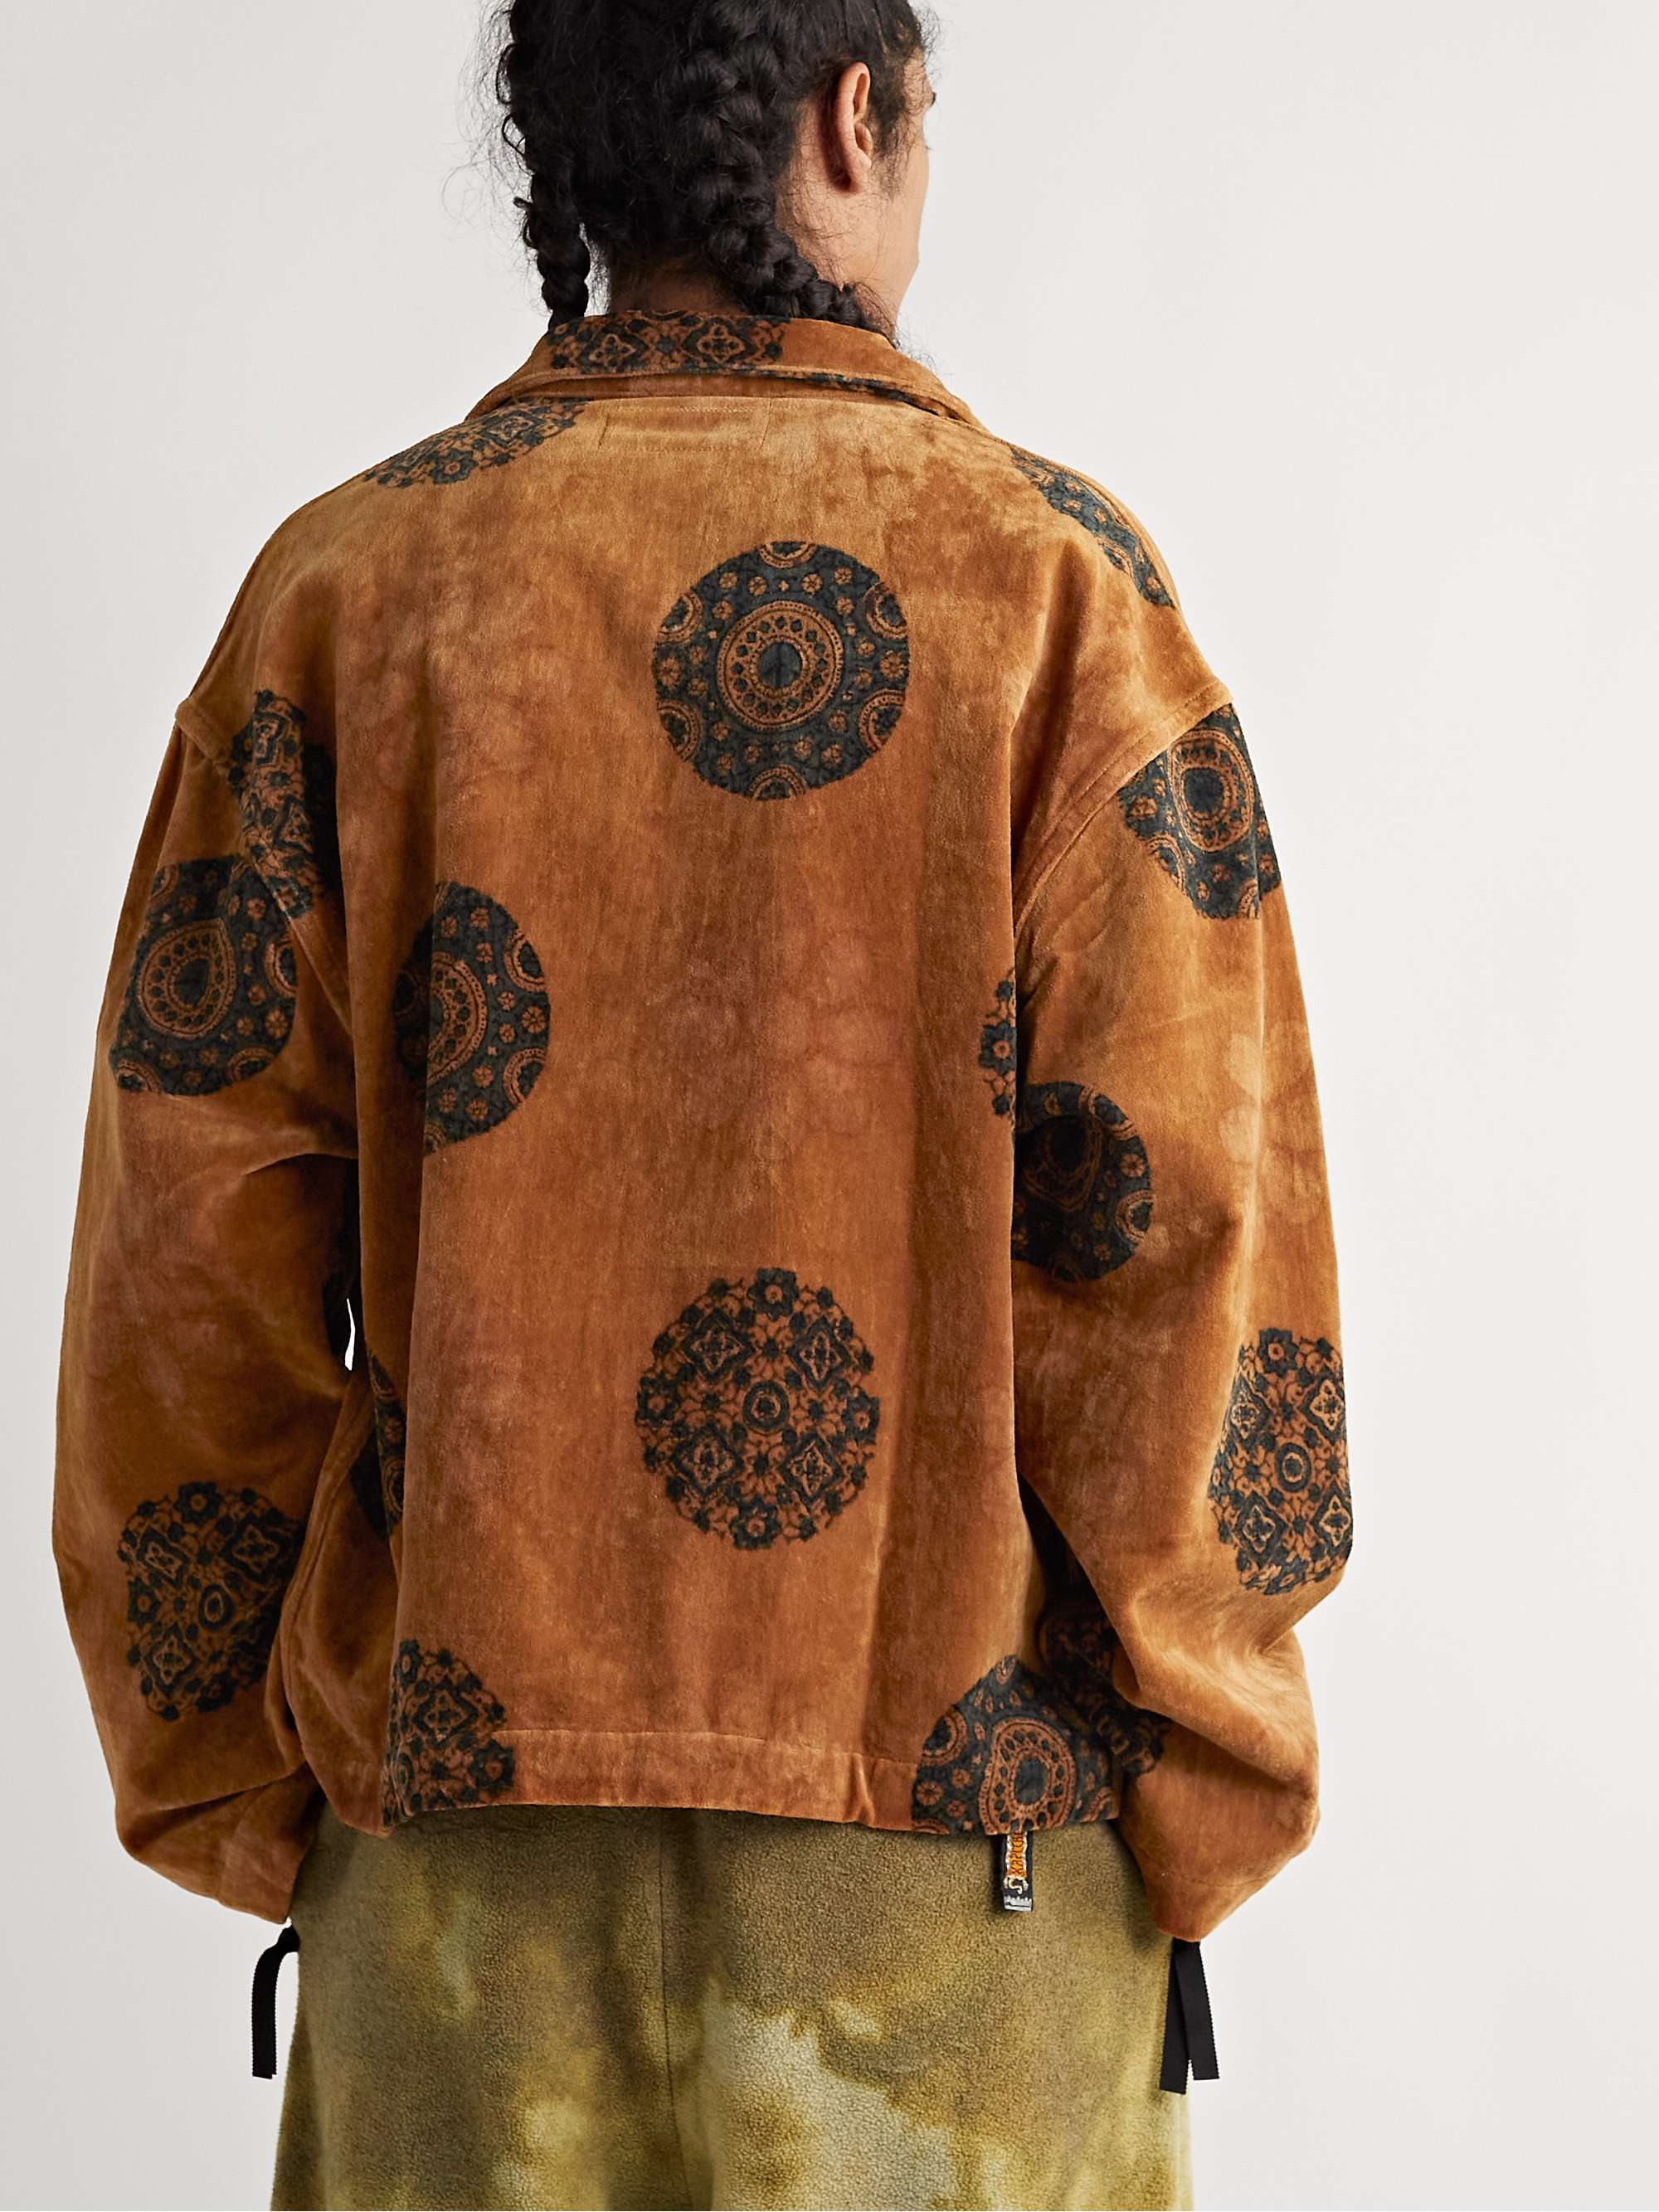 STORY MFG. Short on Time Embellished Organic Cotton-Velvet Jacket